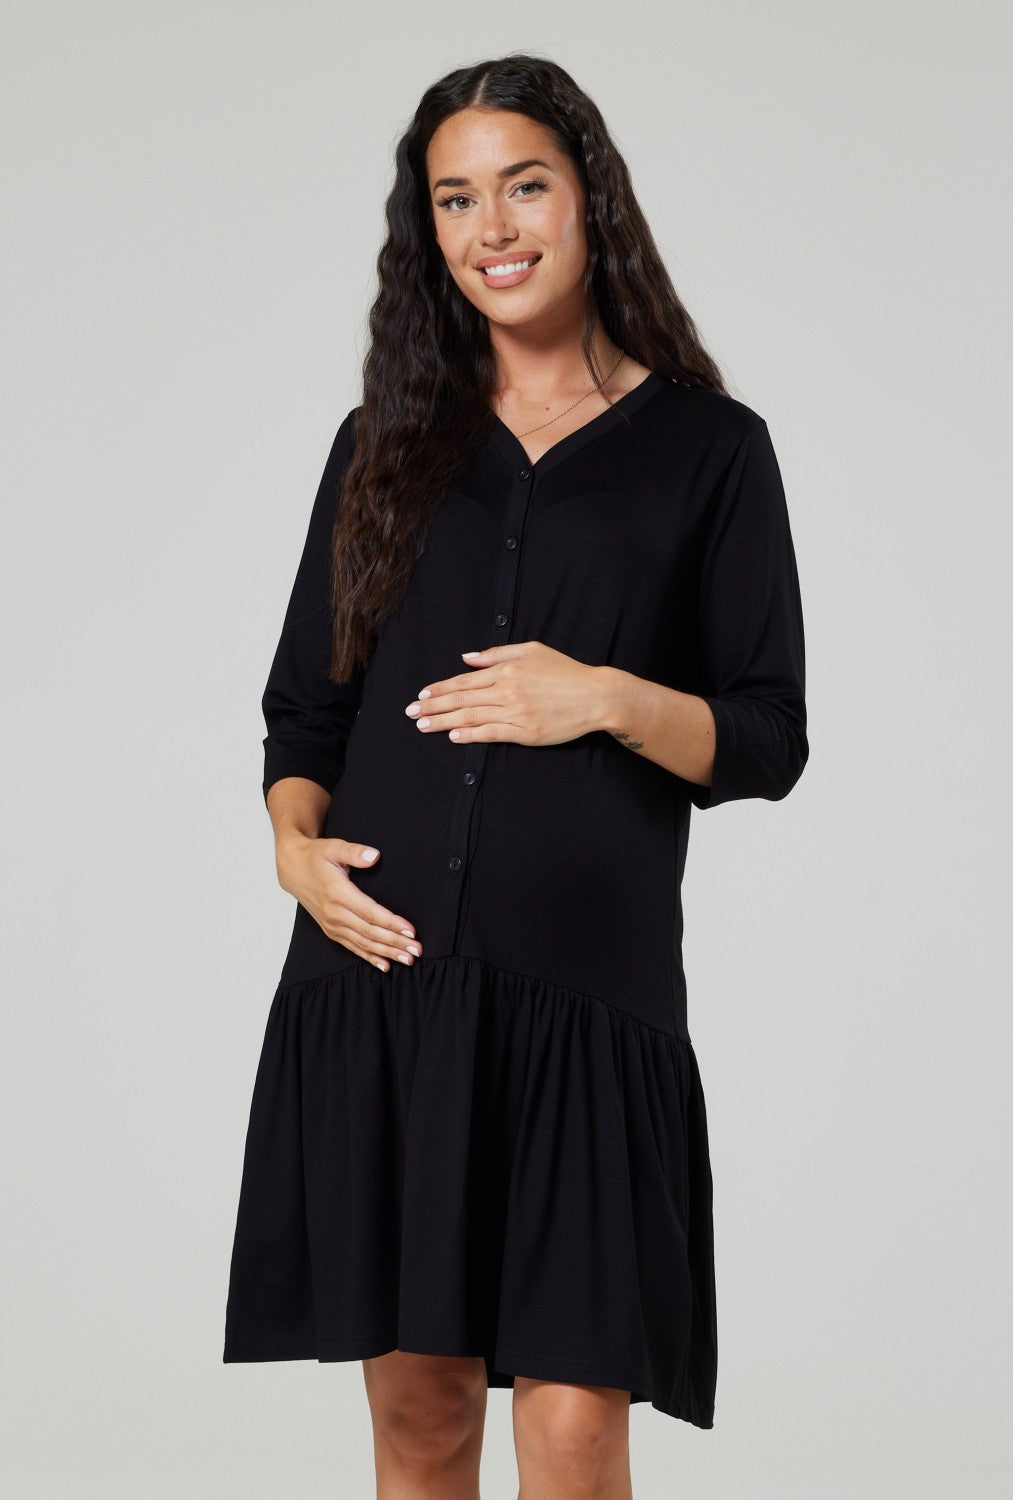 Women’s Maternity Nursing Nightdress